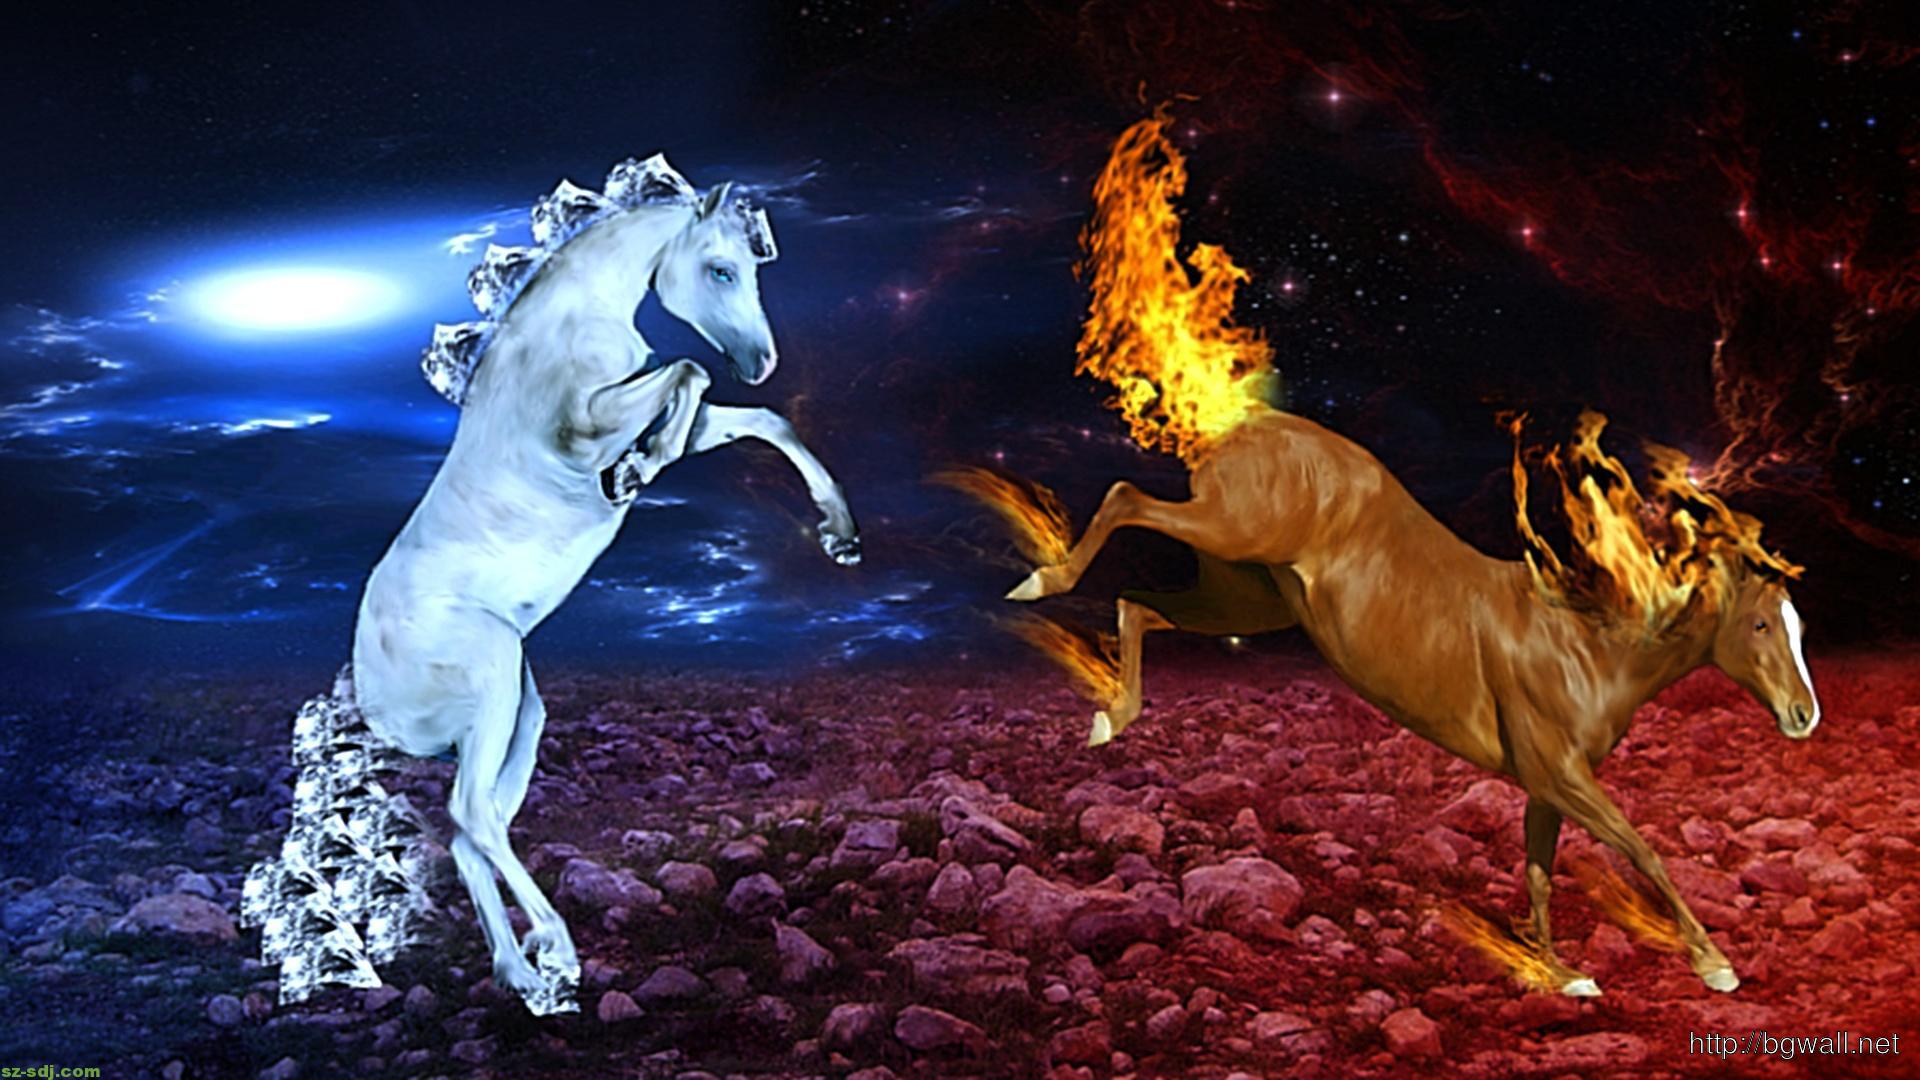 Wallpaper Widescreen Dragon Vs Horse White Fire 3d